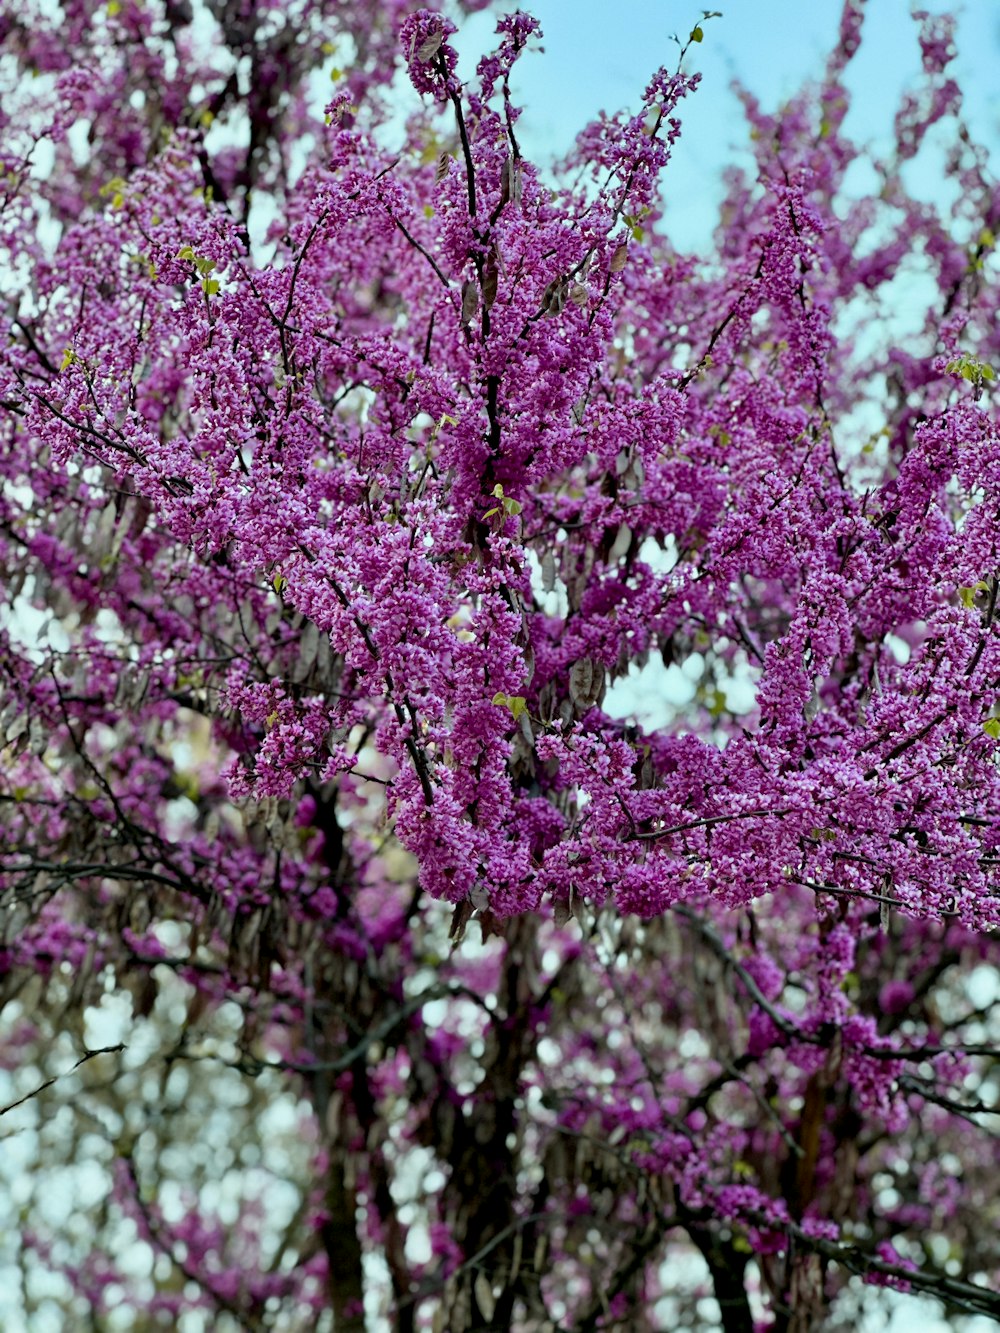 a purple tree with lots of purple flowers